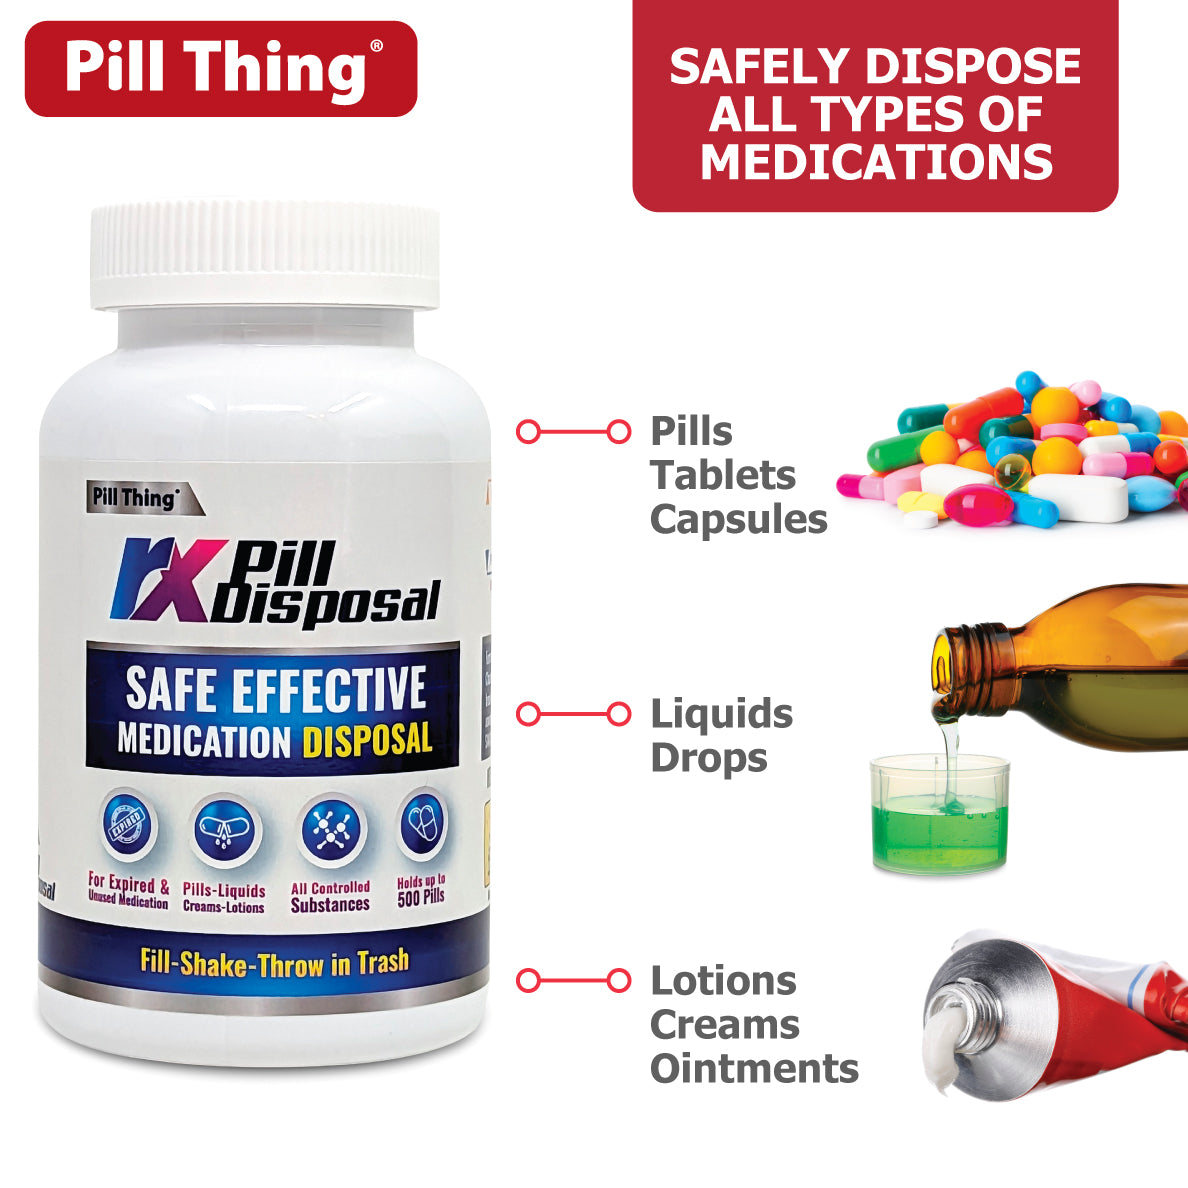 RX Pill Disposal